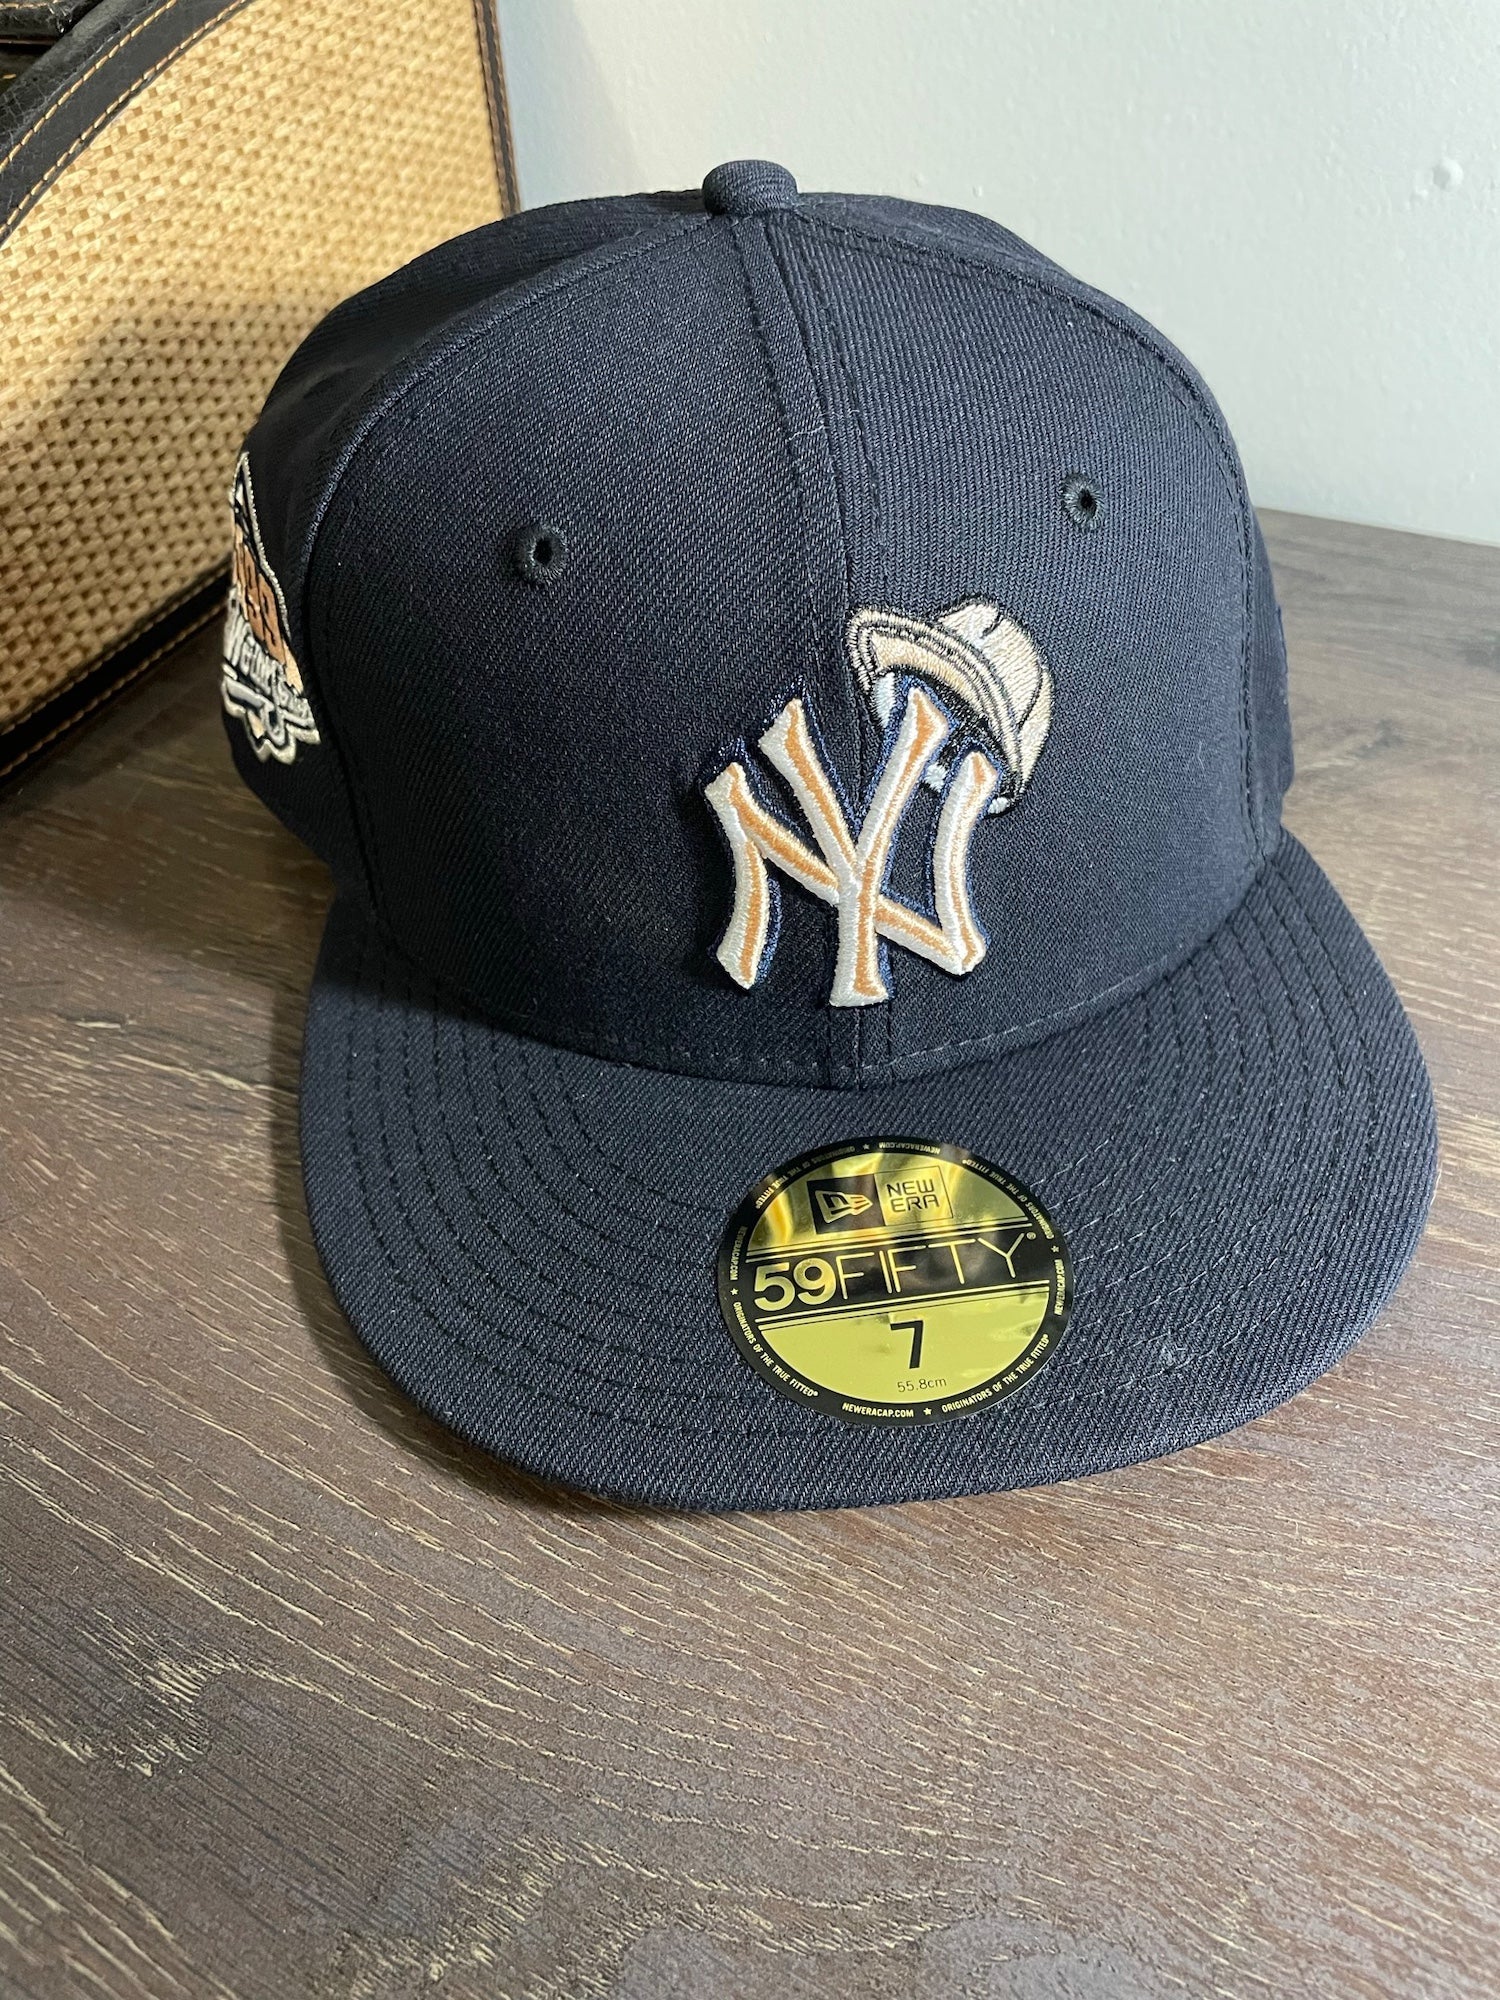 New York Yankees 2016 All Star Game Hat